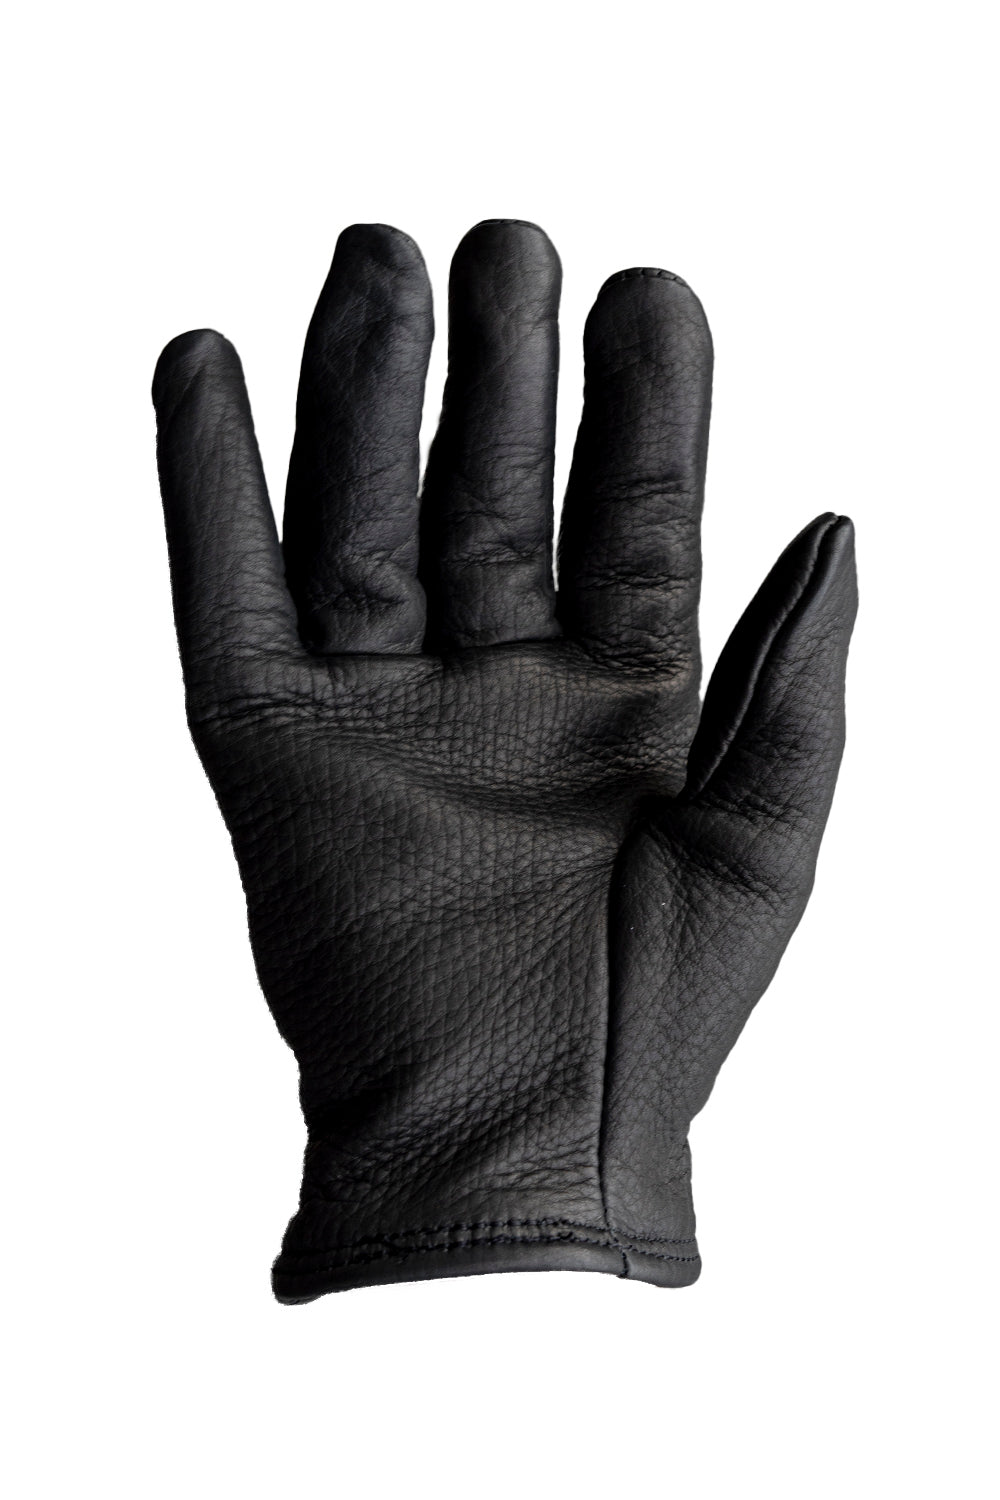 Grifter Company Scoundrel Blackout Winter Poly Lined Gloves -Moto Est.